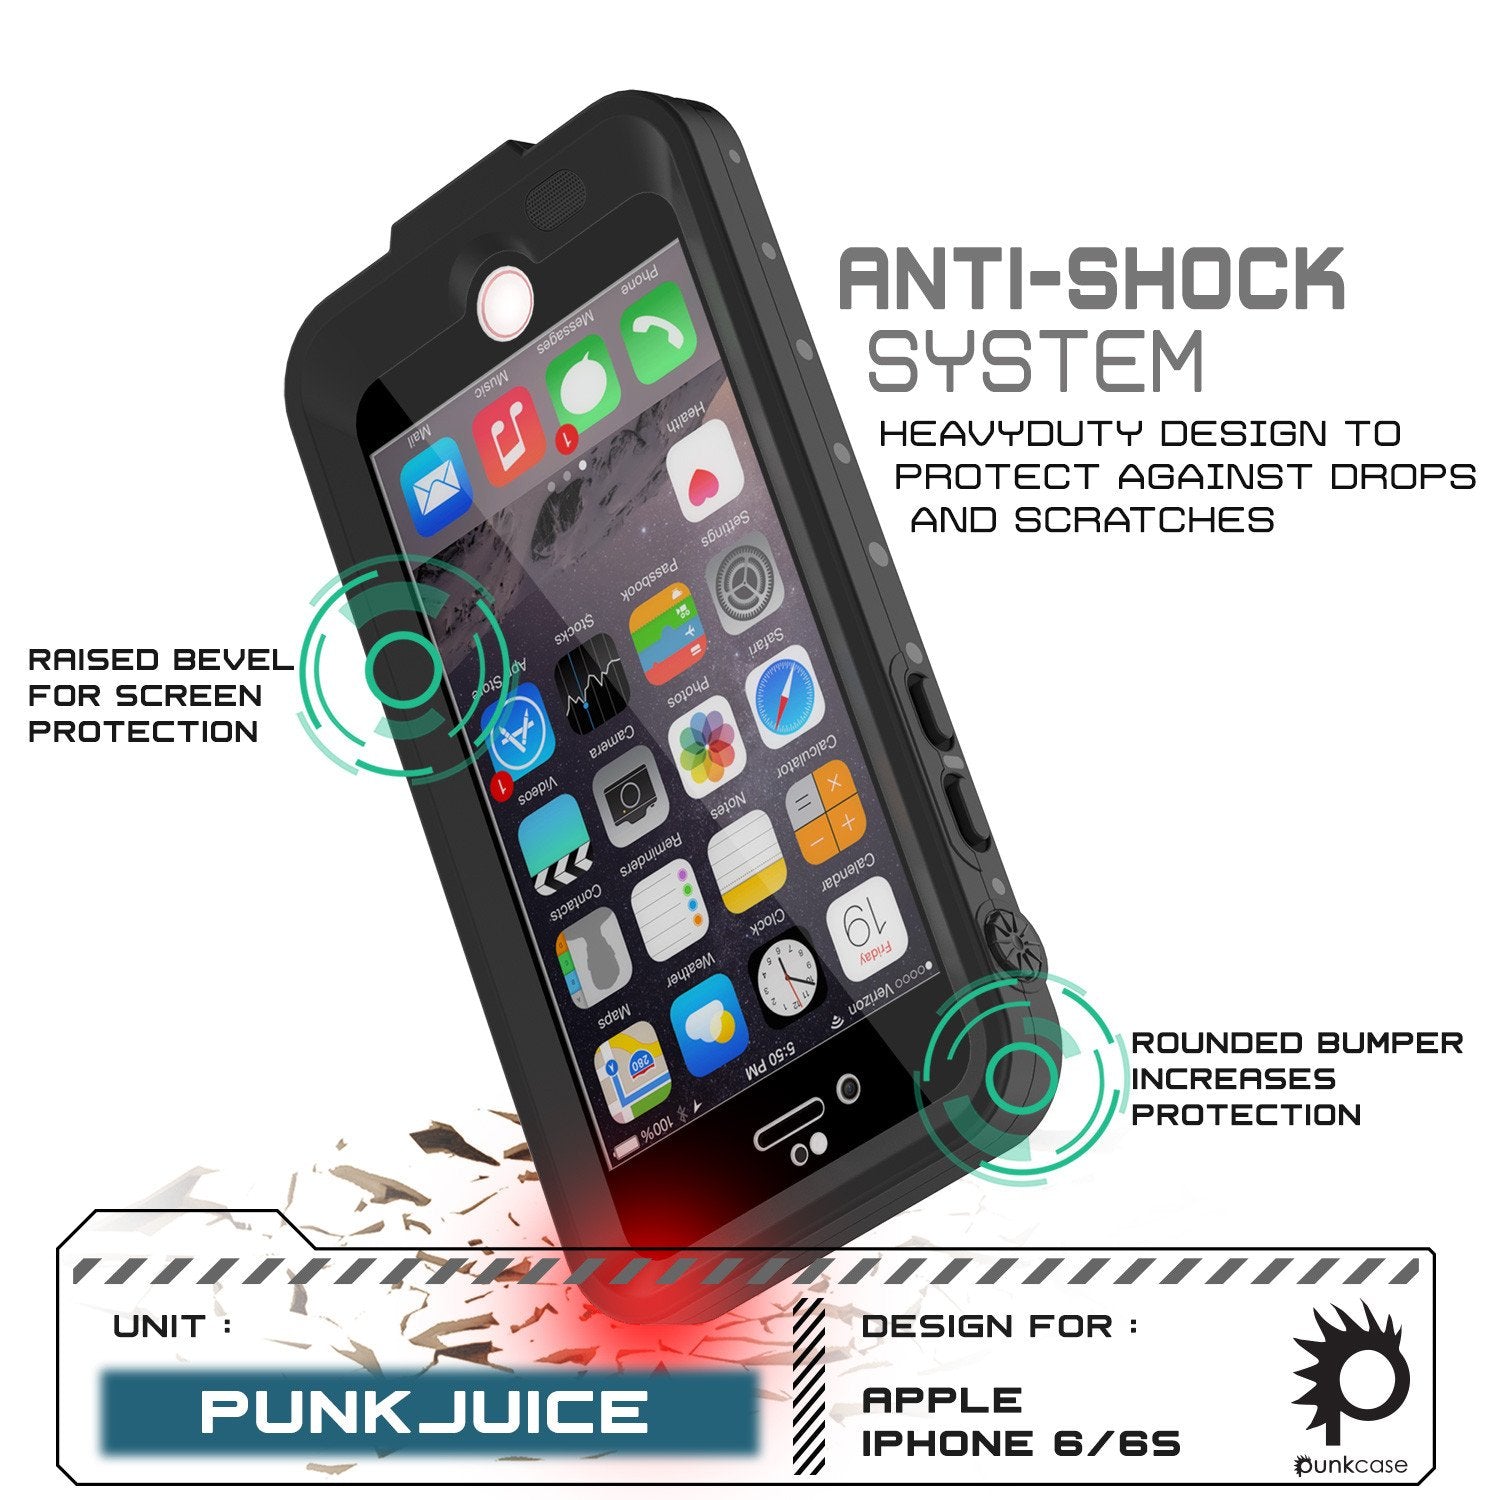 PunkJuice iPhone 6/6s Battery Case Black Waterproof Power Juice Bank w/ 2750mAh  | Fastcharging - PunkCase NZ